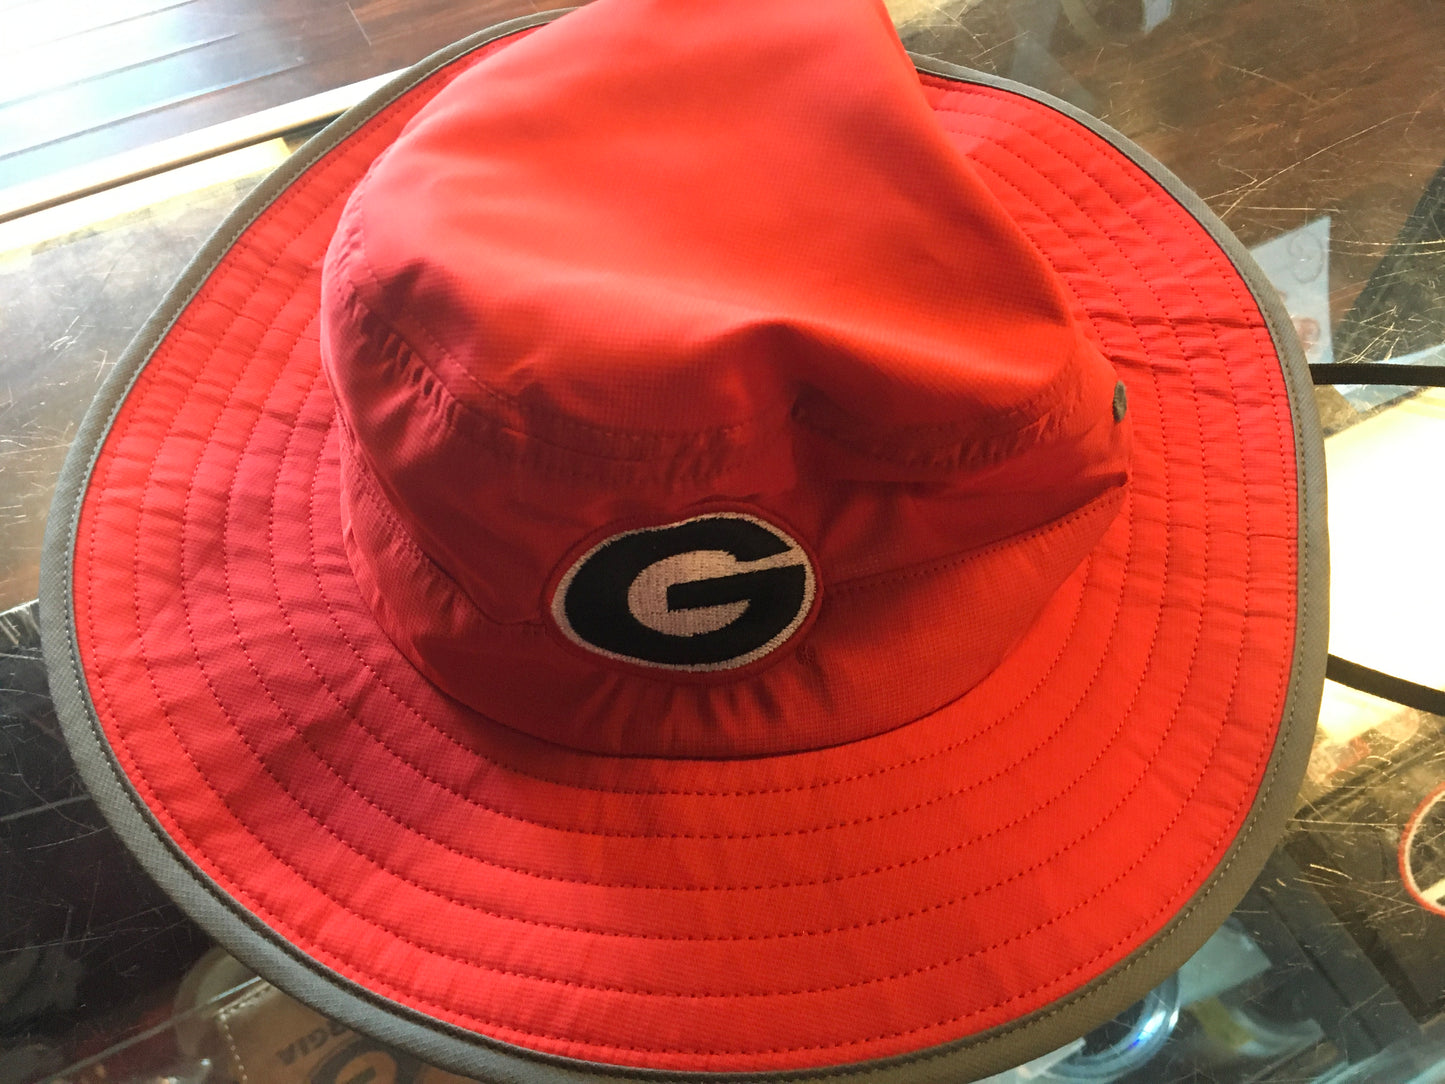 UGA Bucket/Fishing Hat